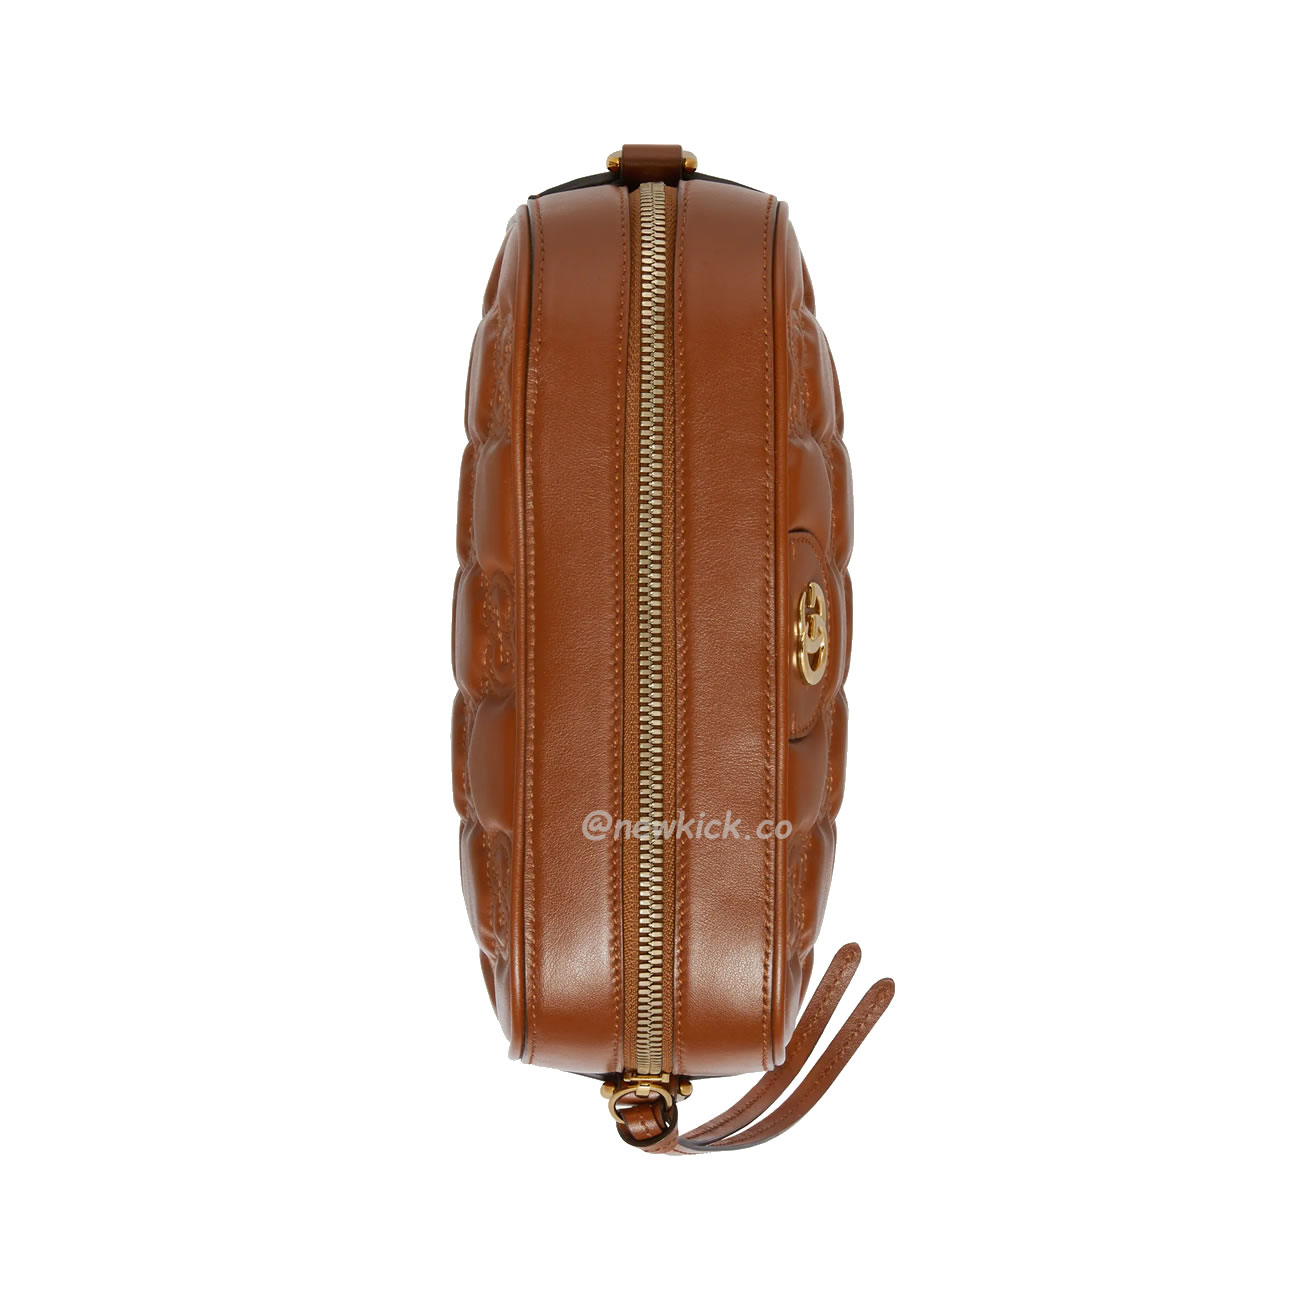 Gucci Gg Matelass Small Bag Product Details 702234 Um8hg 1046 (14) - newkick.org